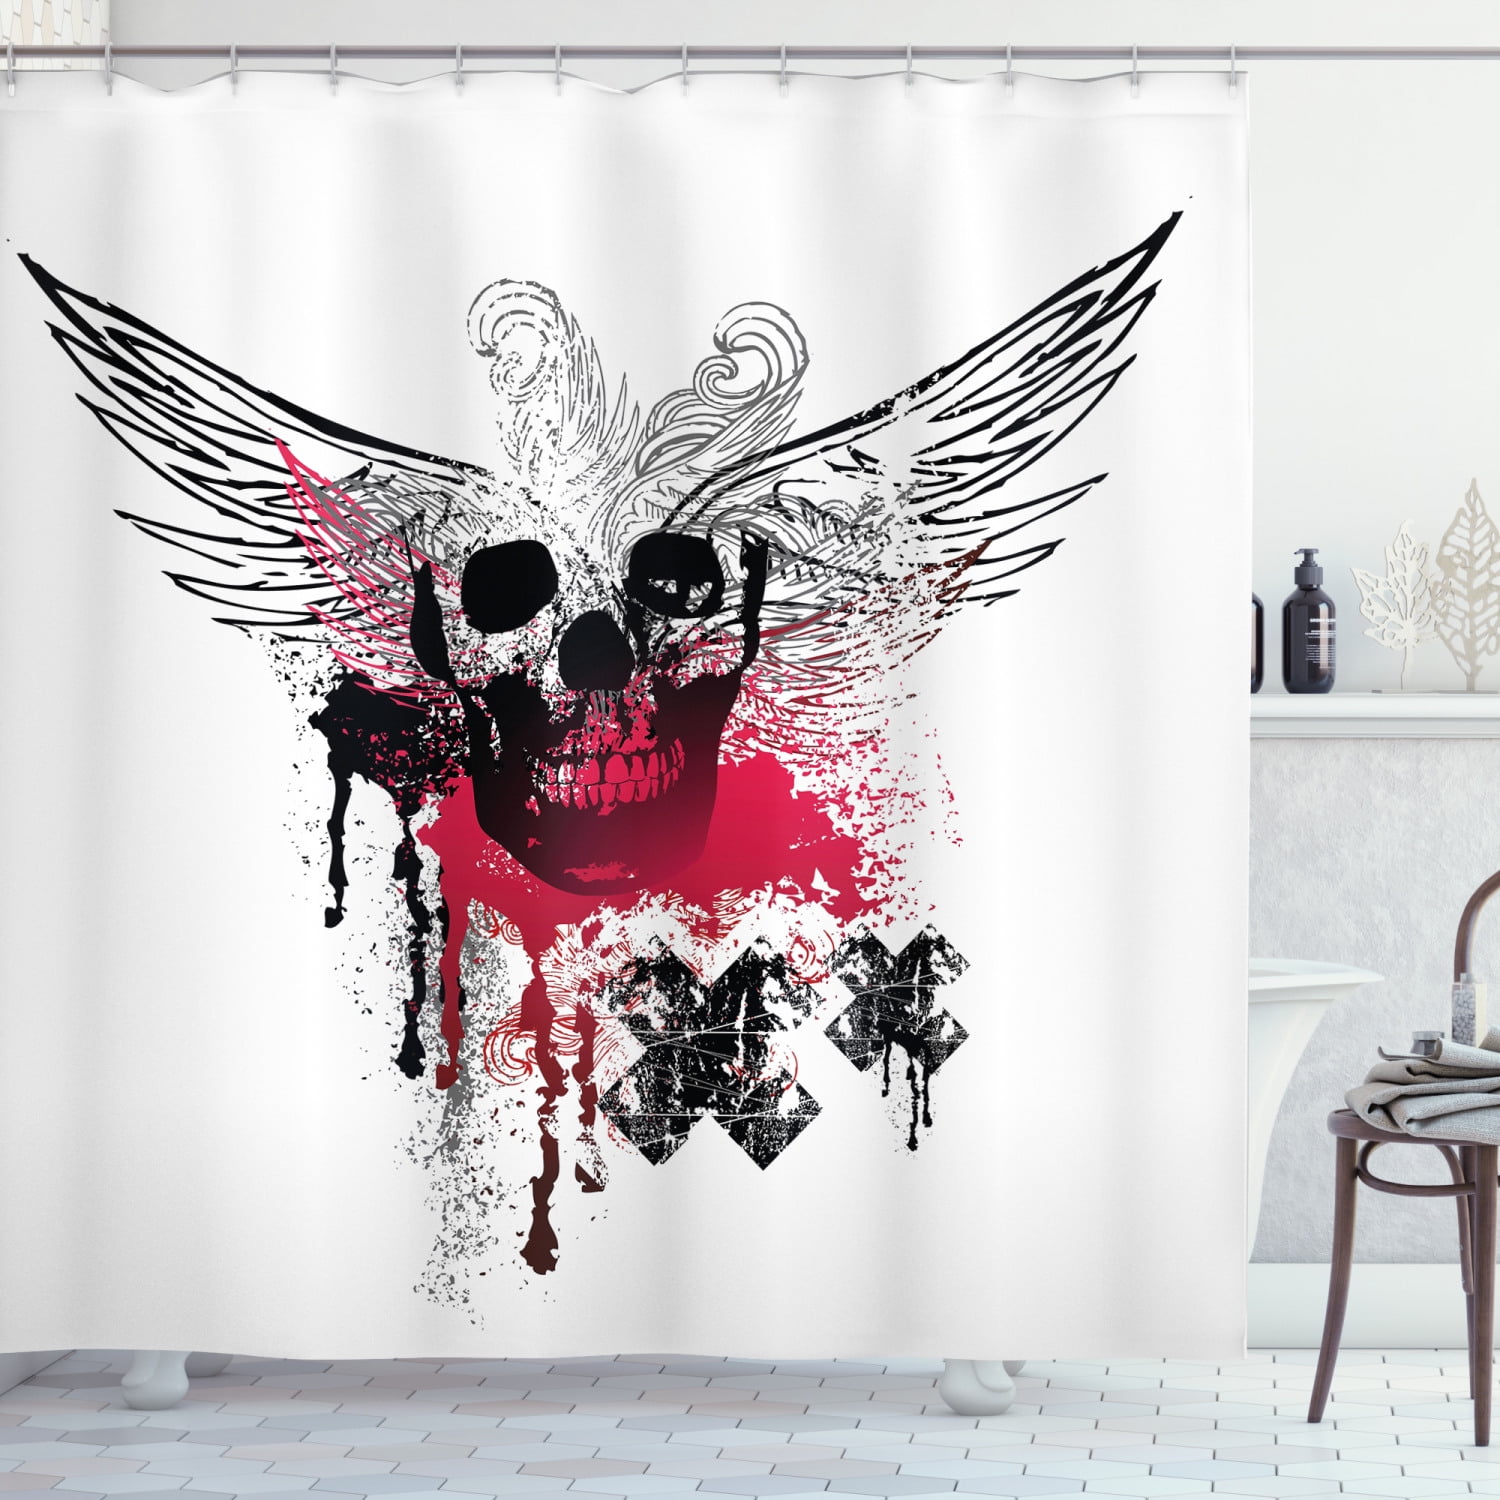 72X72" Aggressive Skull Shower Curtain Set Waterproof Fabric Bathroom Curtain 